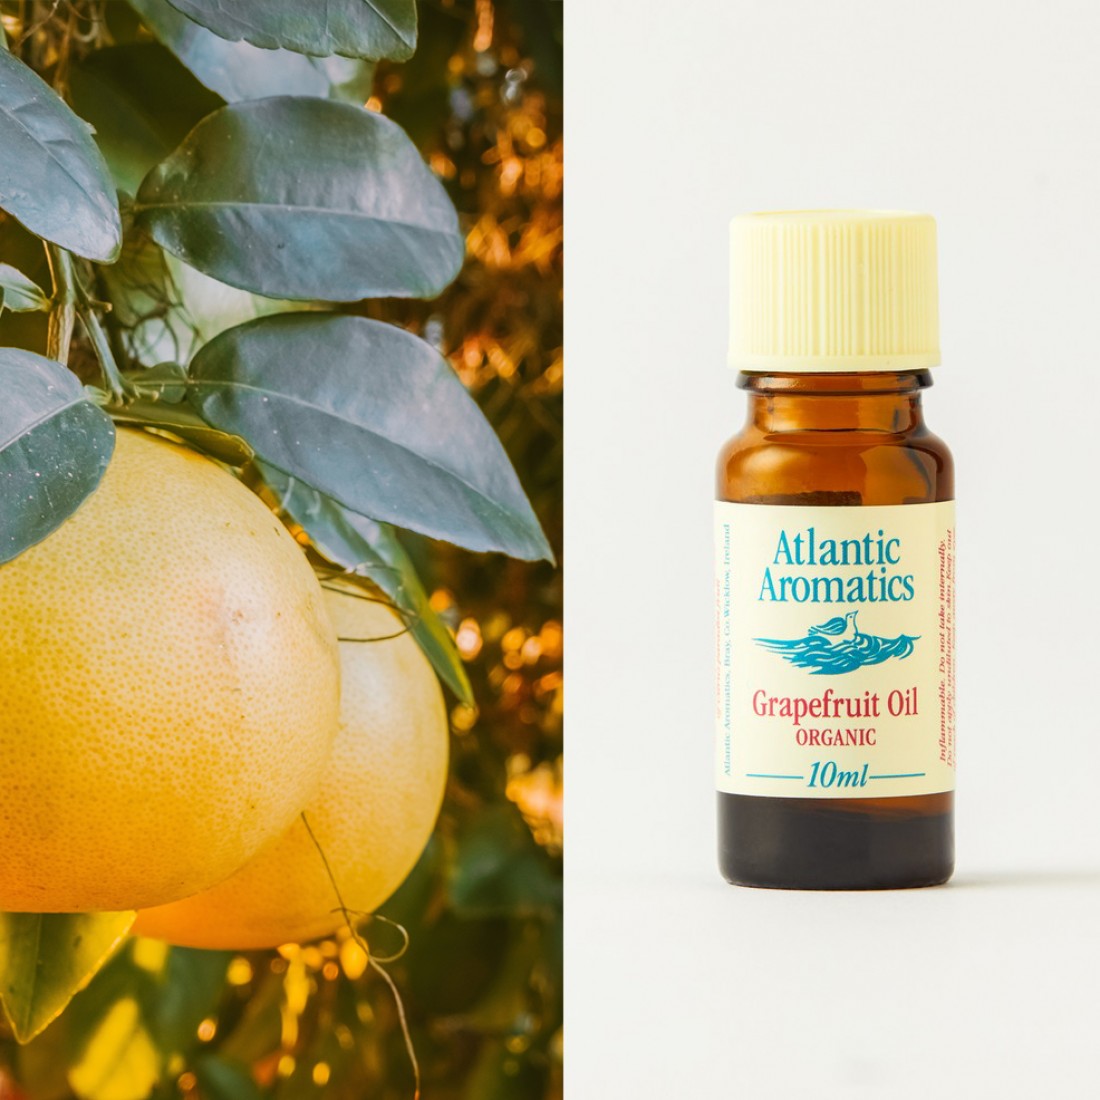 Atlantic Aromatics Grapefruit Oil Organic 10ml